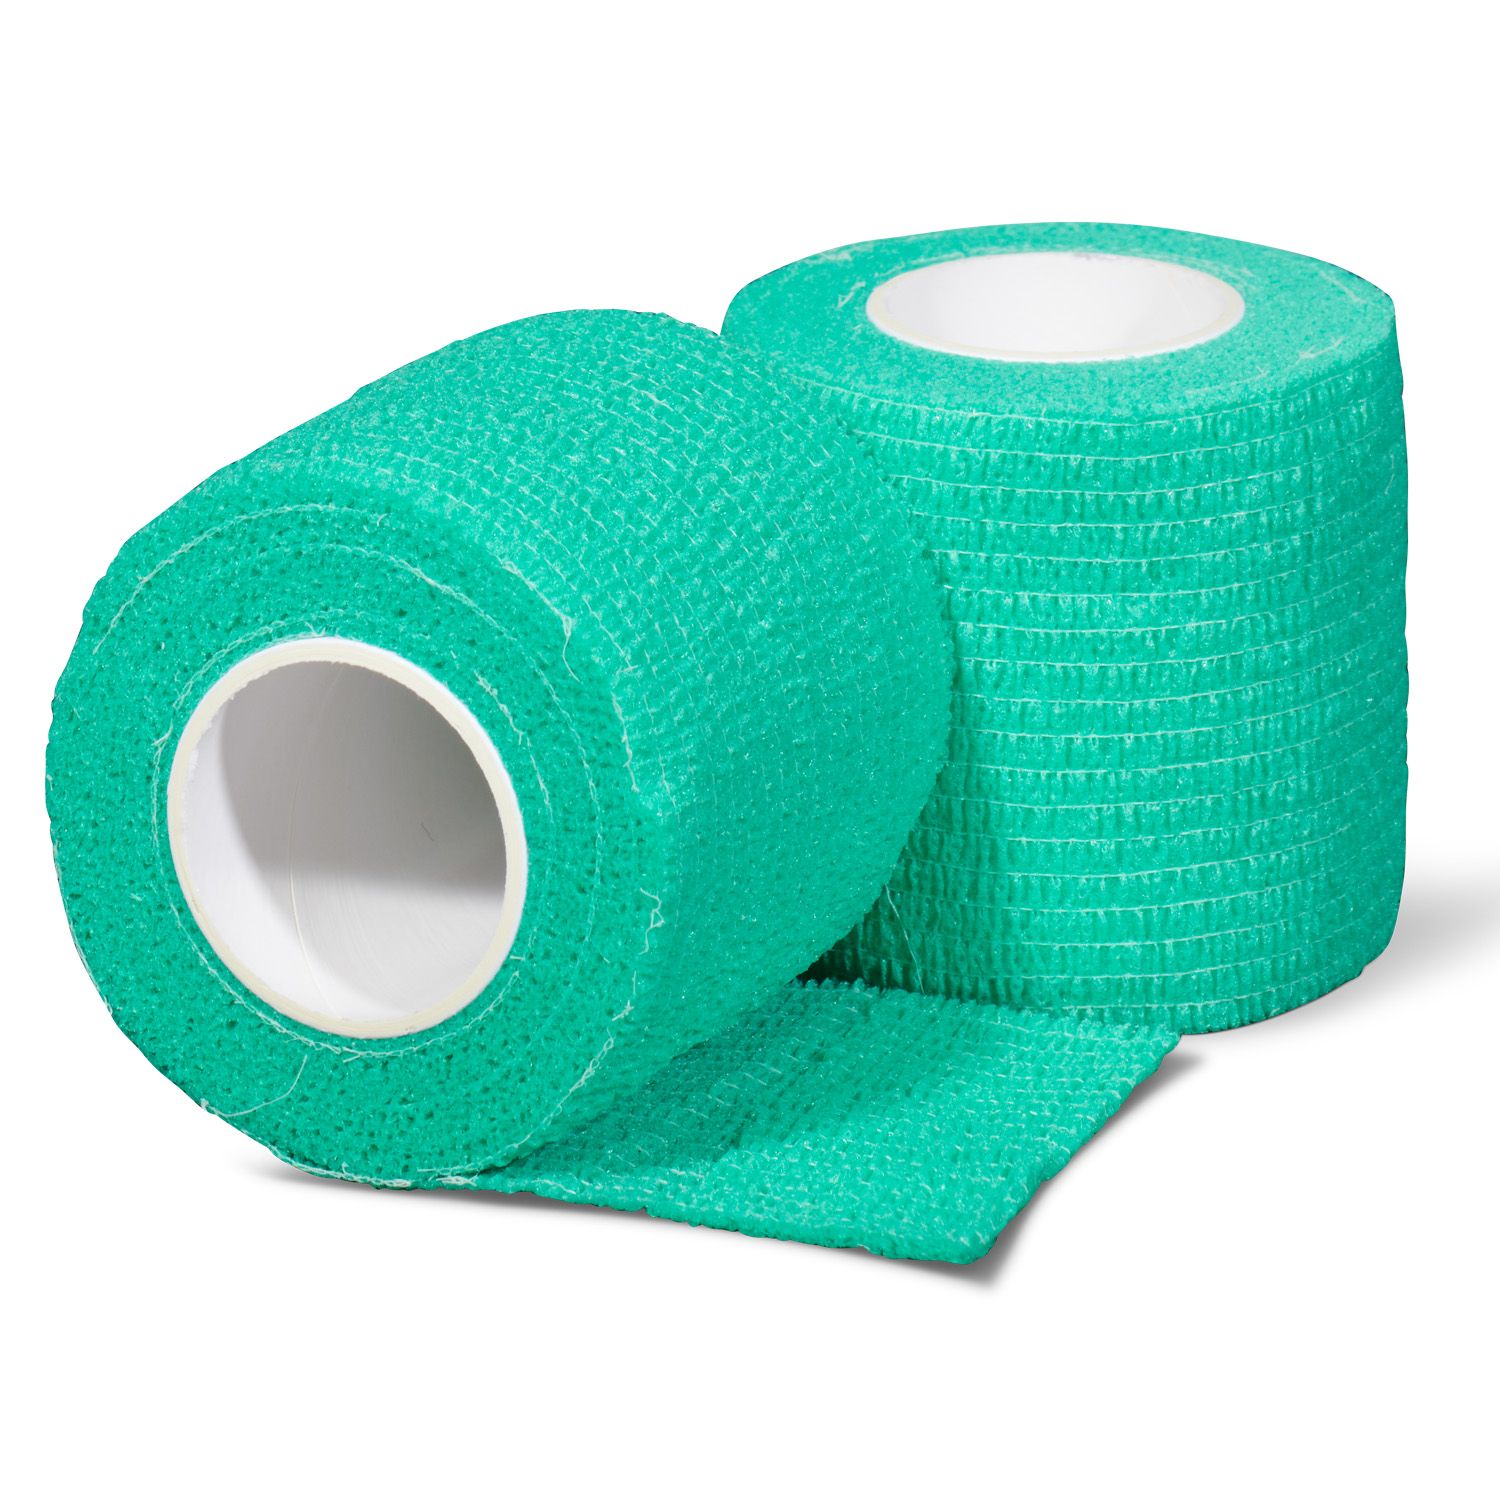 gladiator sports underwrap bandage per 12 rolls green